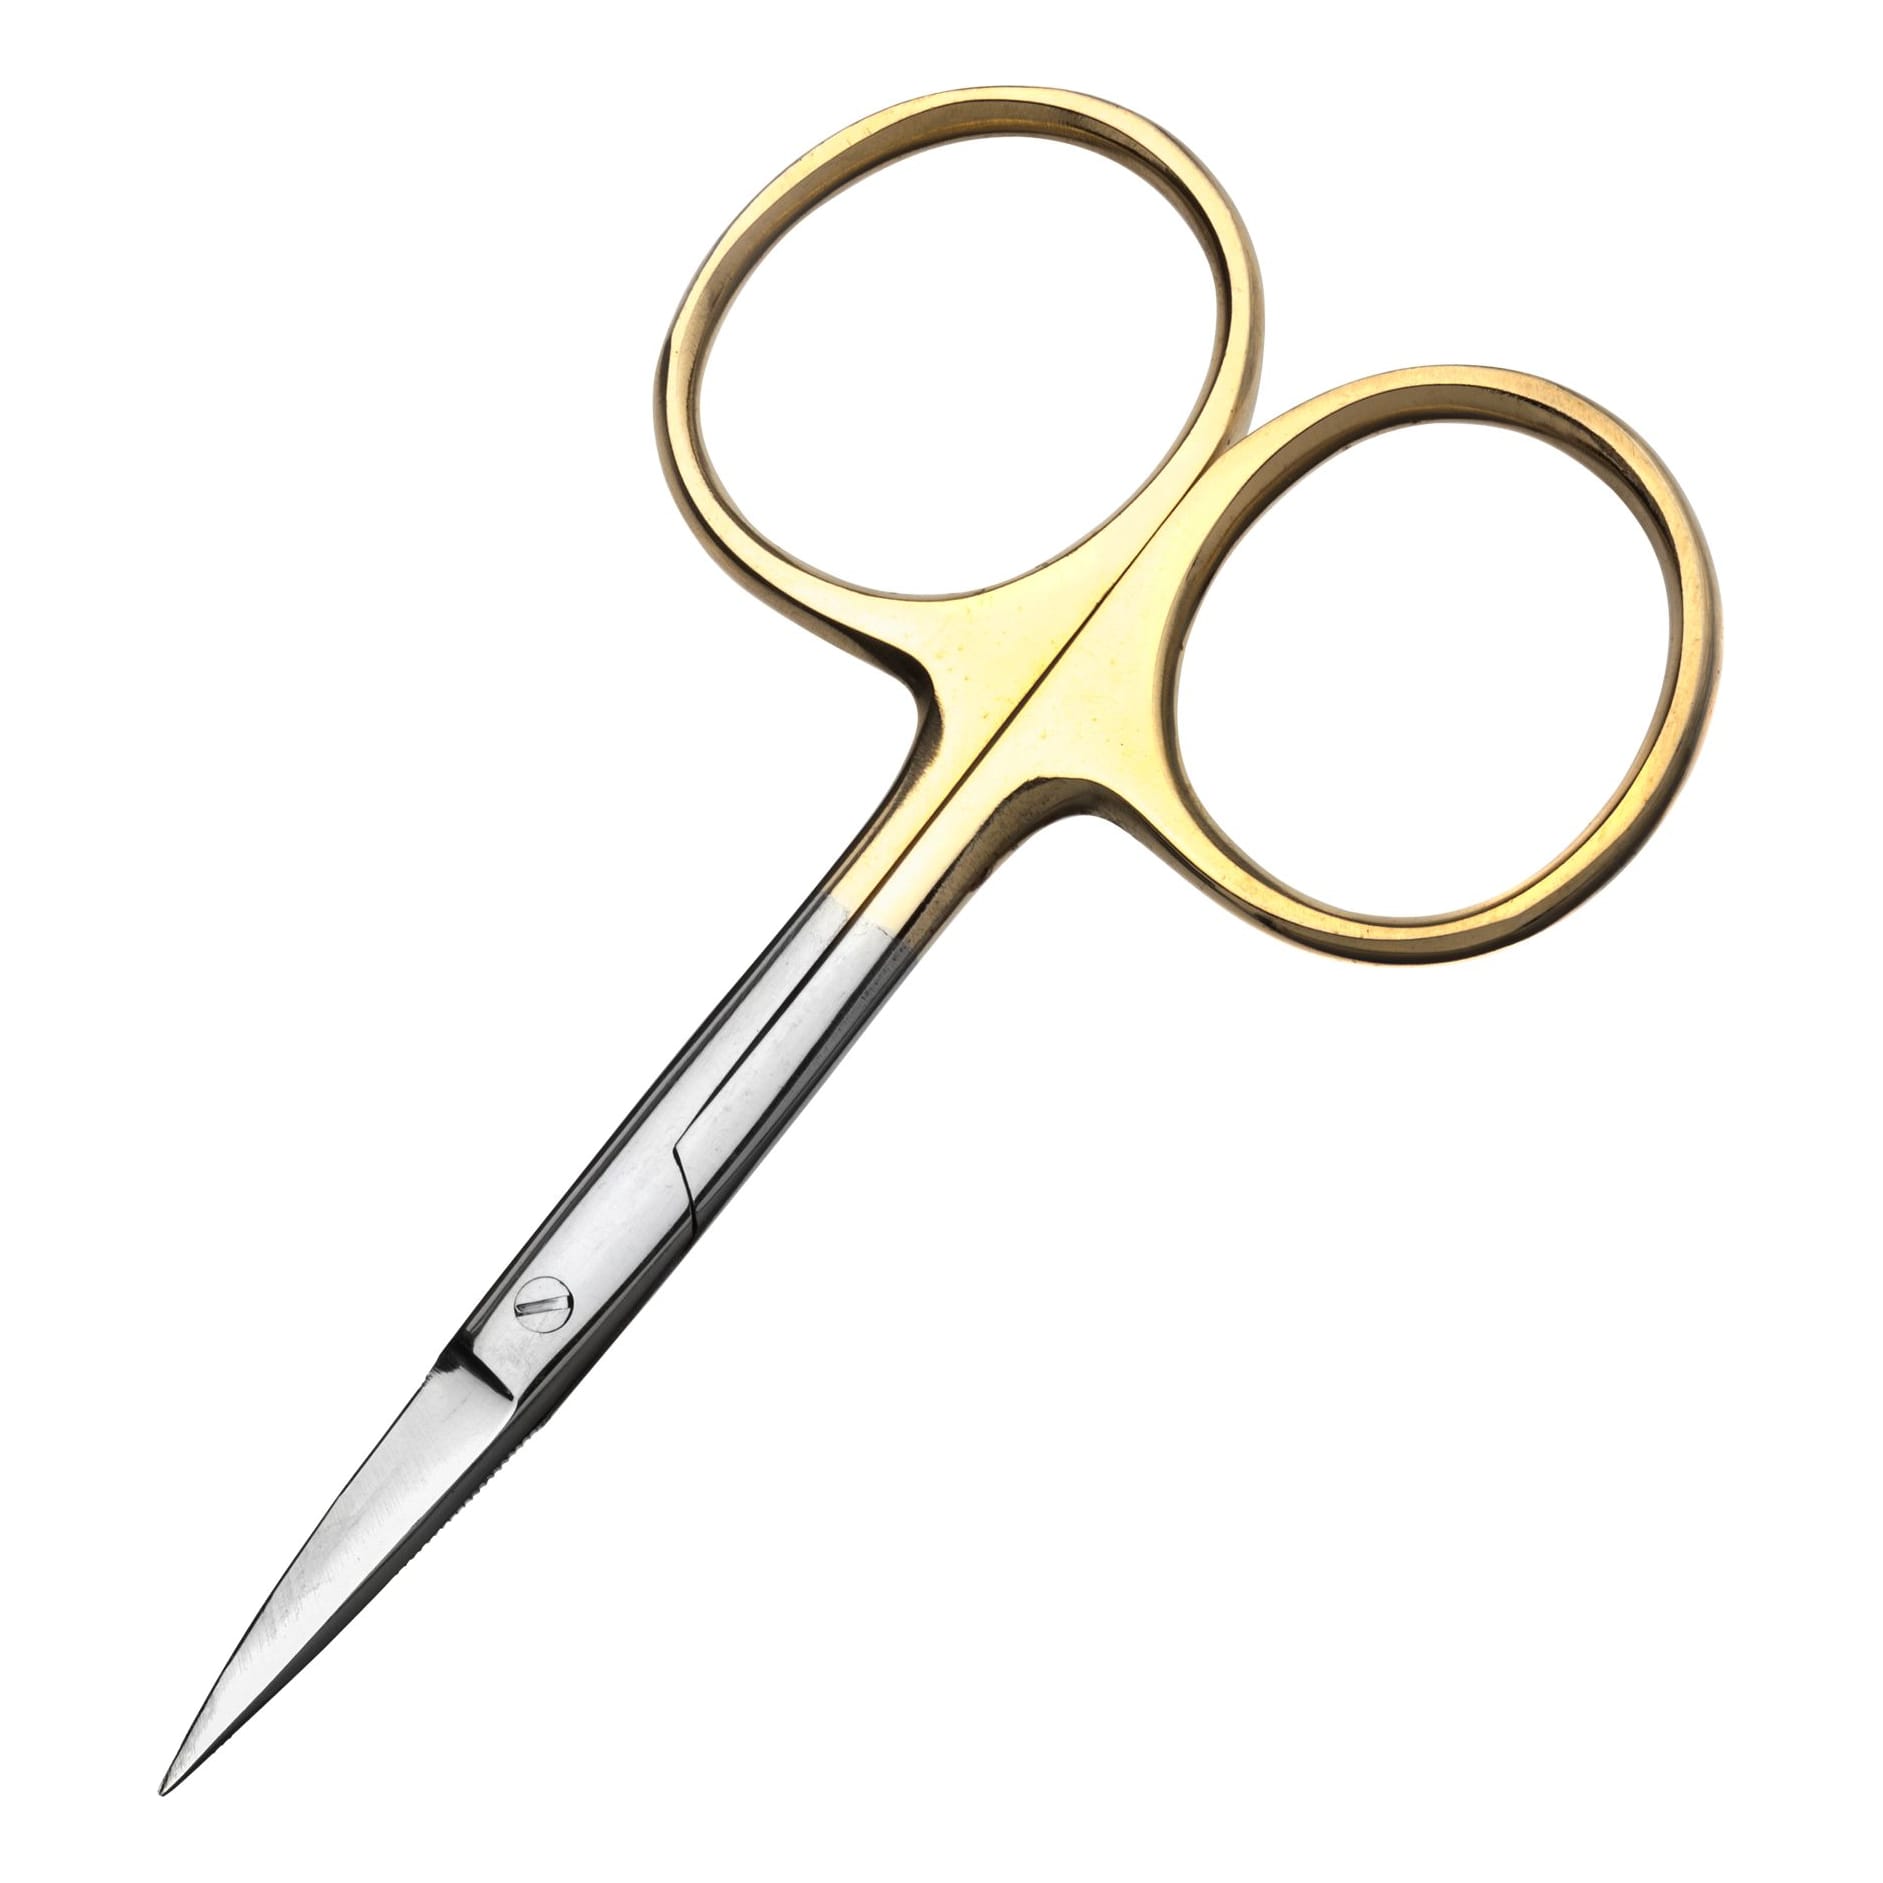 White River Fly Shop® Gold Loop Scissors - Iris Scissors